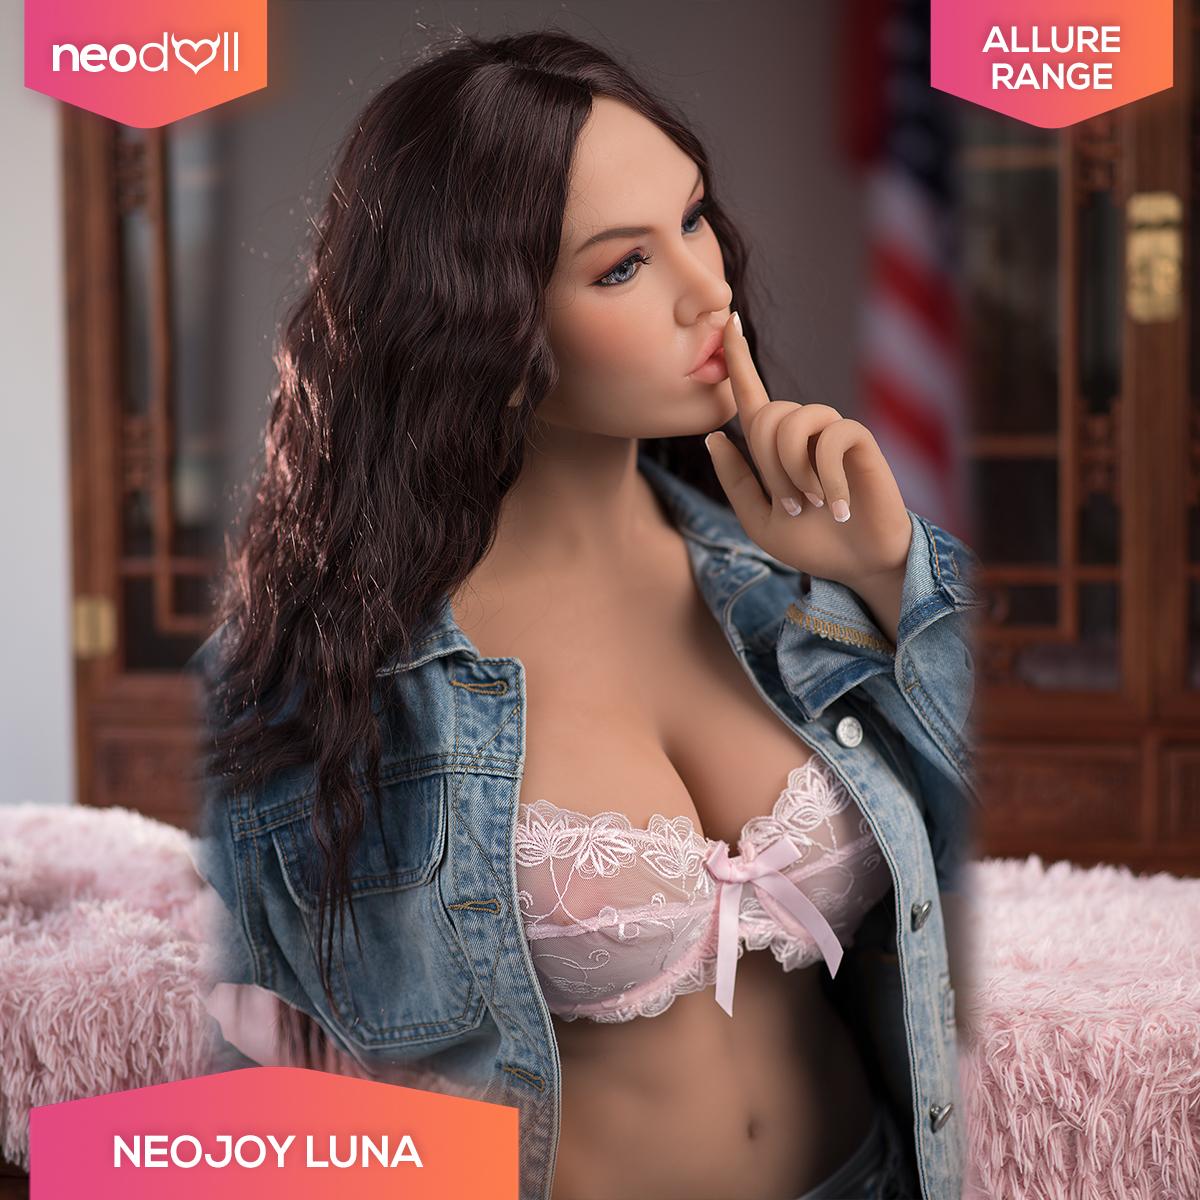 Neodoll Allure Luna - Realistic Sex Doll - 161cm - Tan